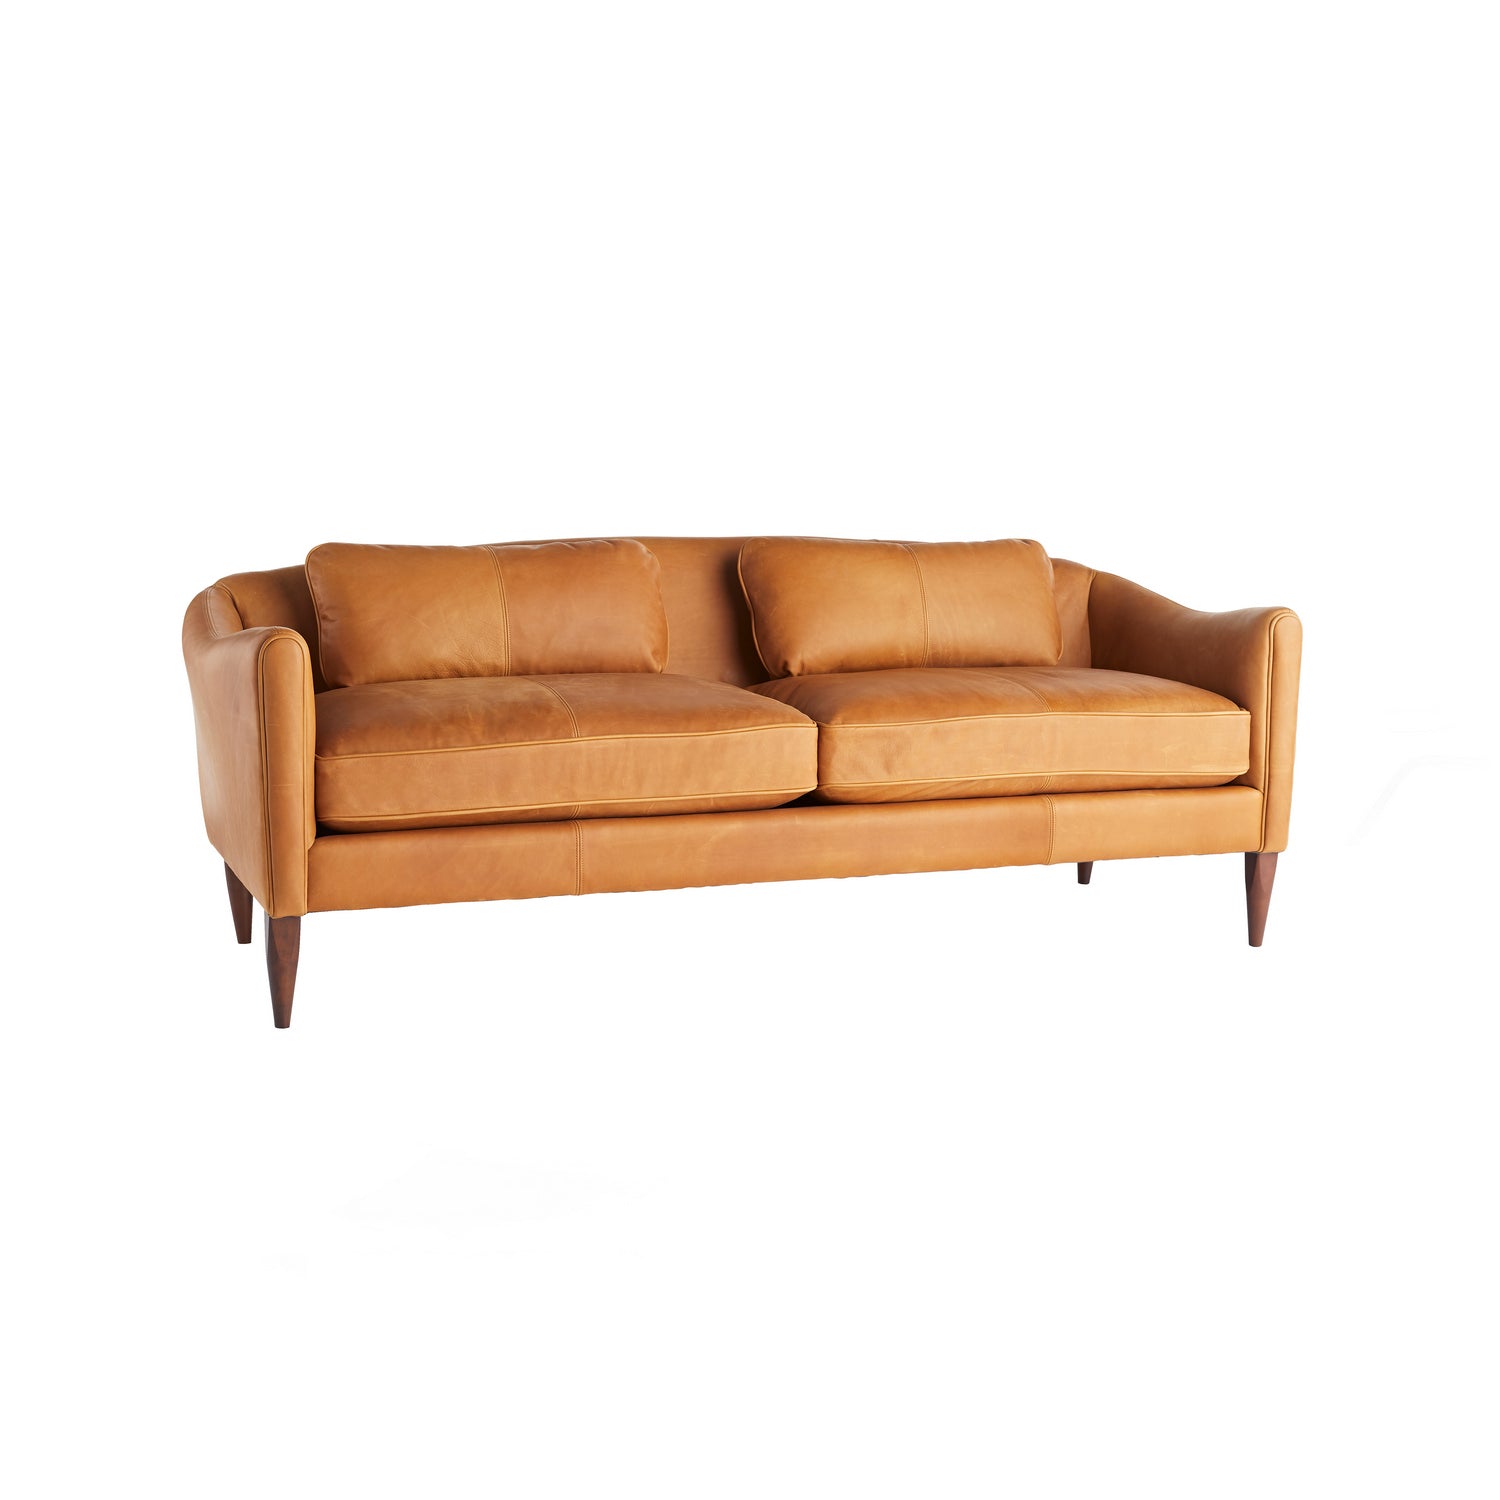 Arteriors - 8154 - Upholstery - Sofa - Vincent - Butterscotch Leather/Dark Walnut